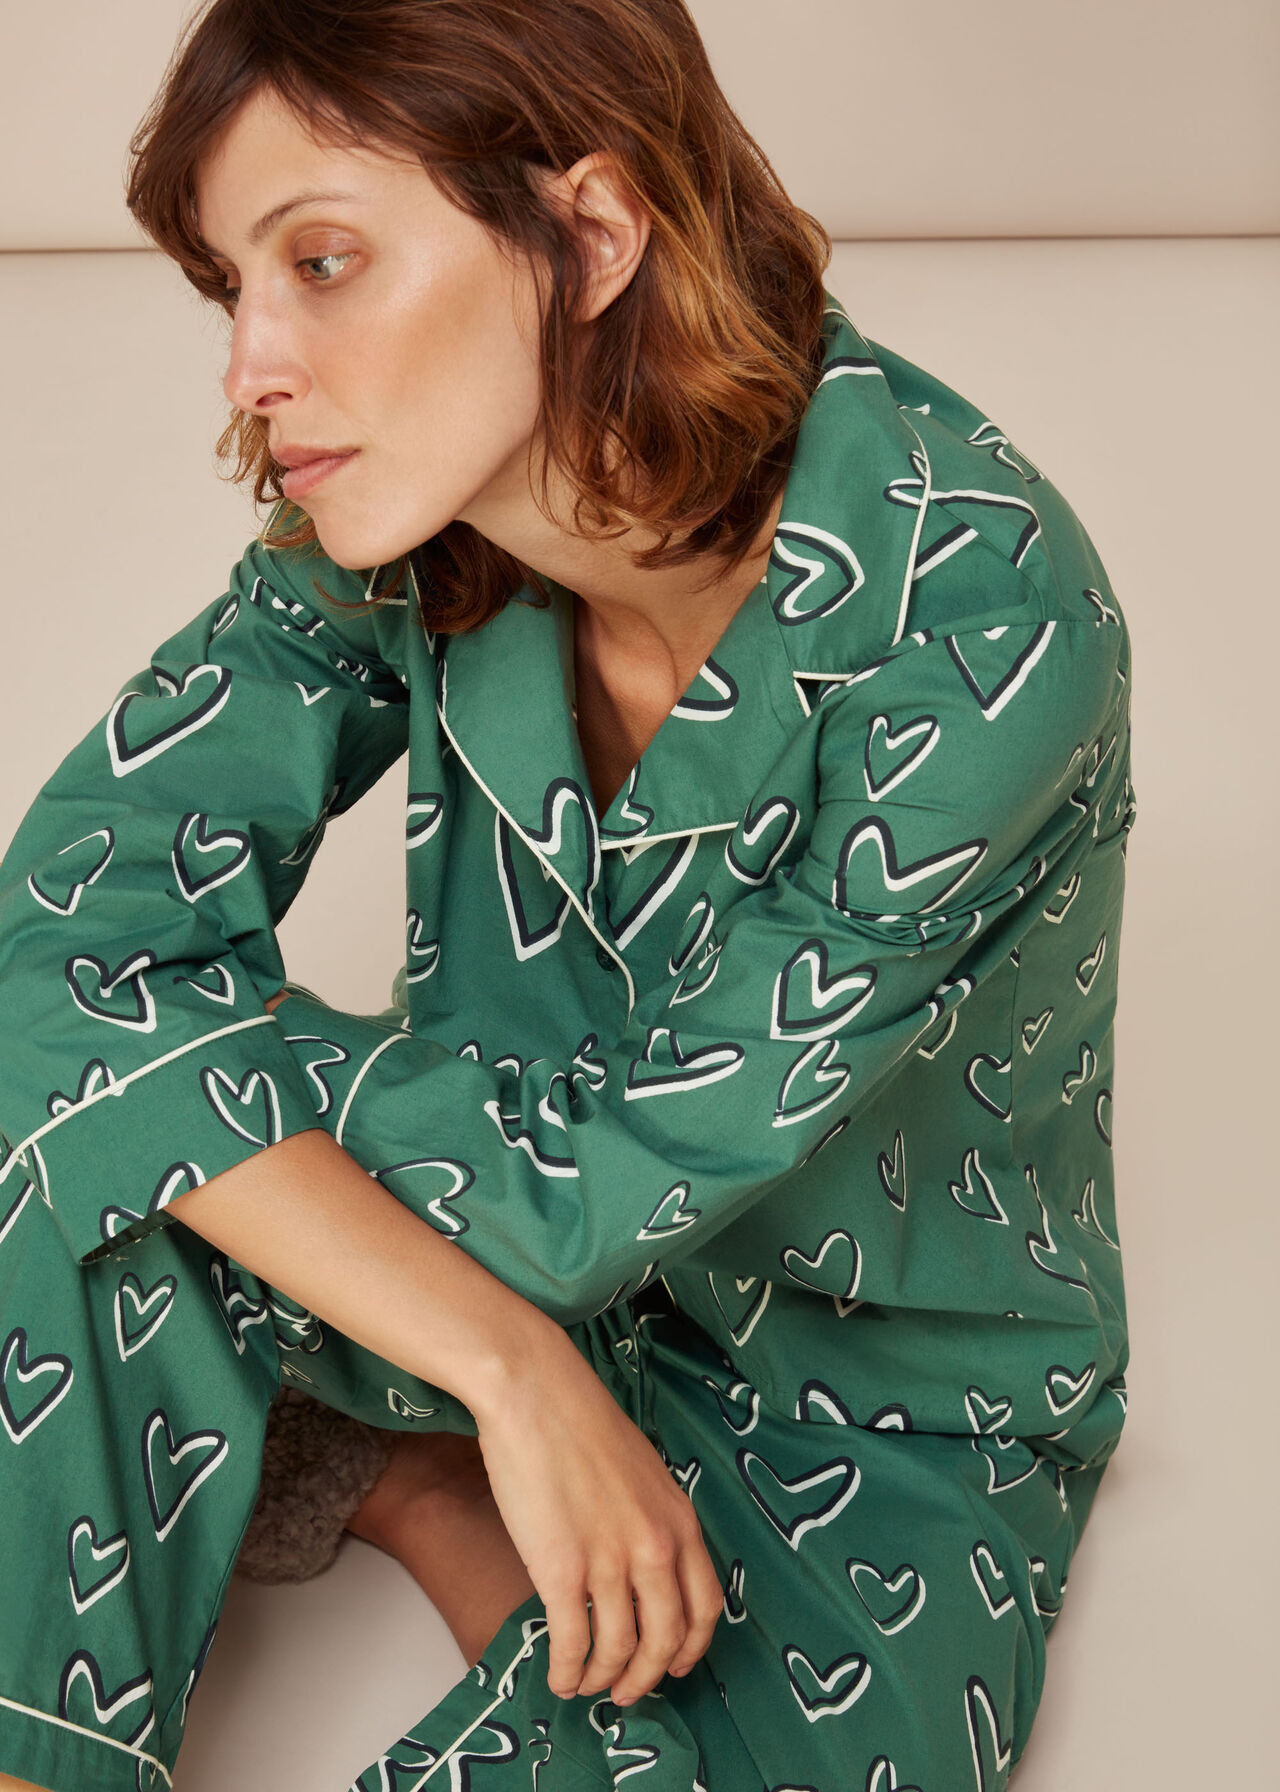 Verstoring Vochtig Chaise longue Green/Multi Heart Print Cotton Pyjama Set | WHISTLES 